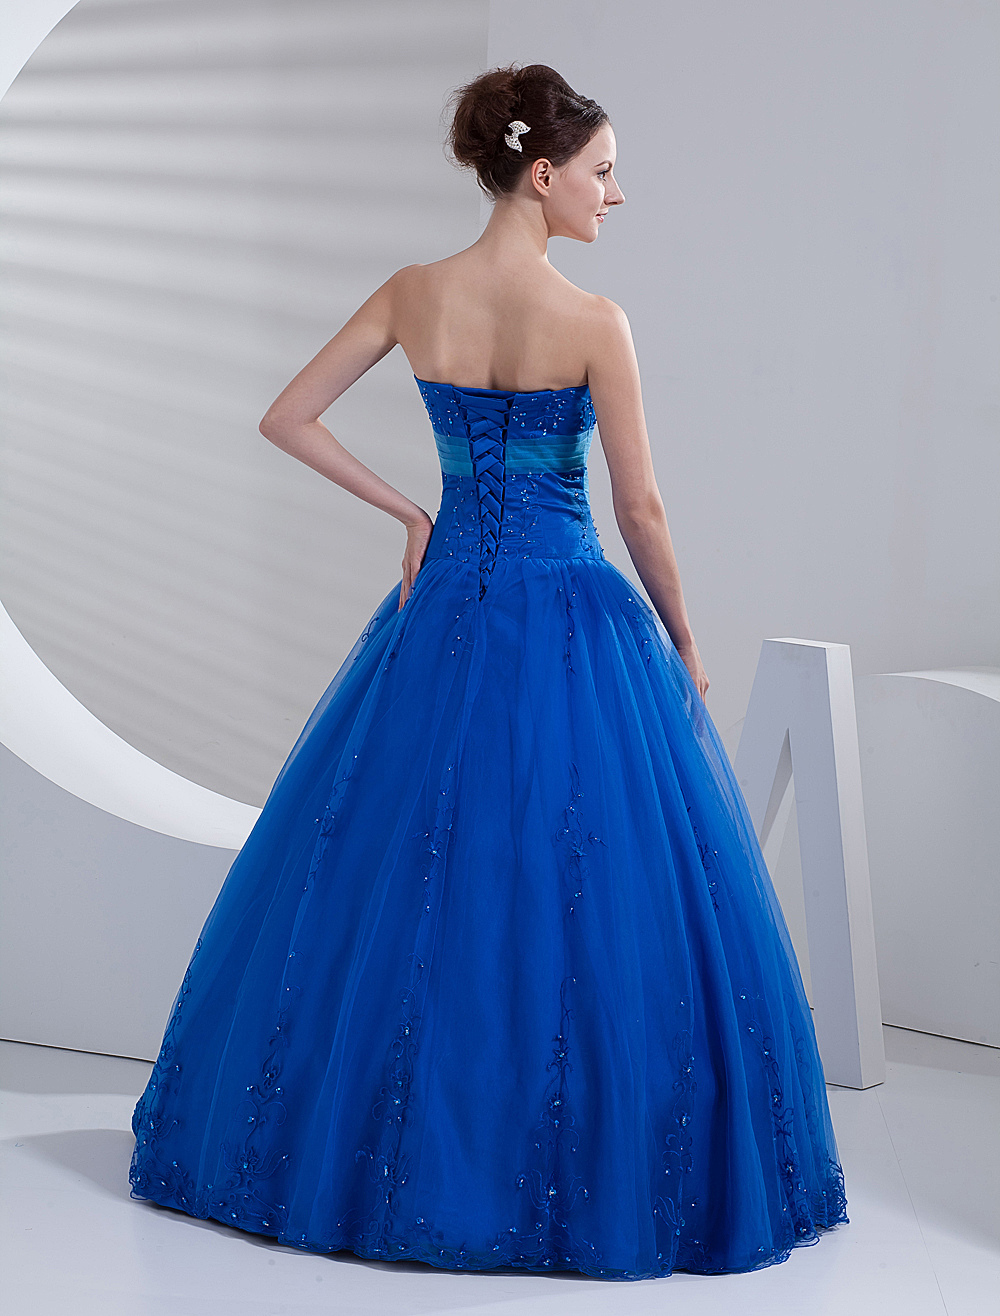 Elegant Ball Gown Royal Blue Tulle Quinceanera Dress - Milanoo.com